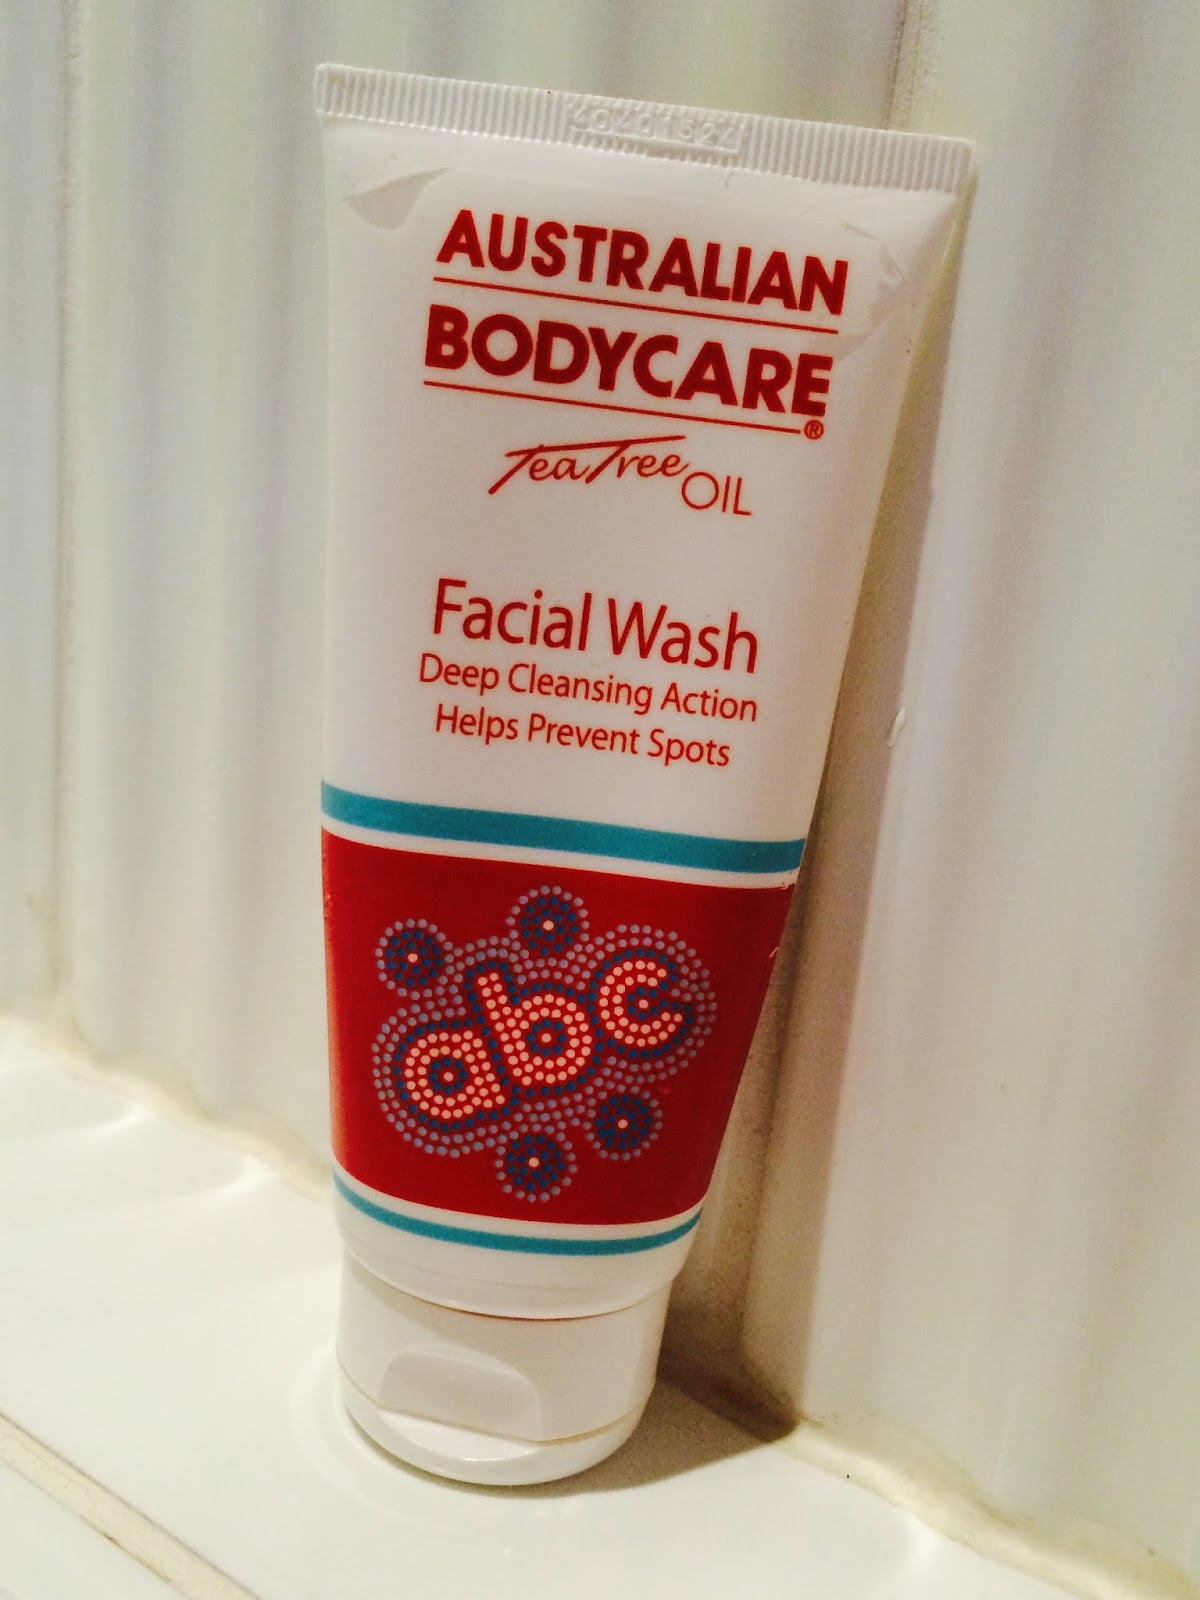 fiktion I øvrigt ovn Australian Bodycare Facial Wash and Spot Stick - Quick Review